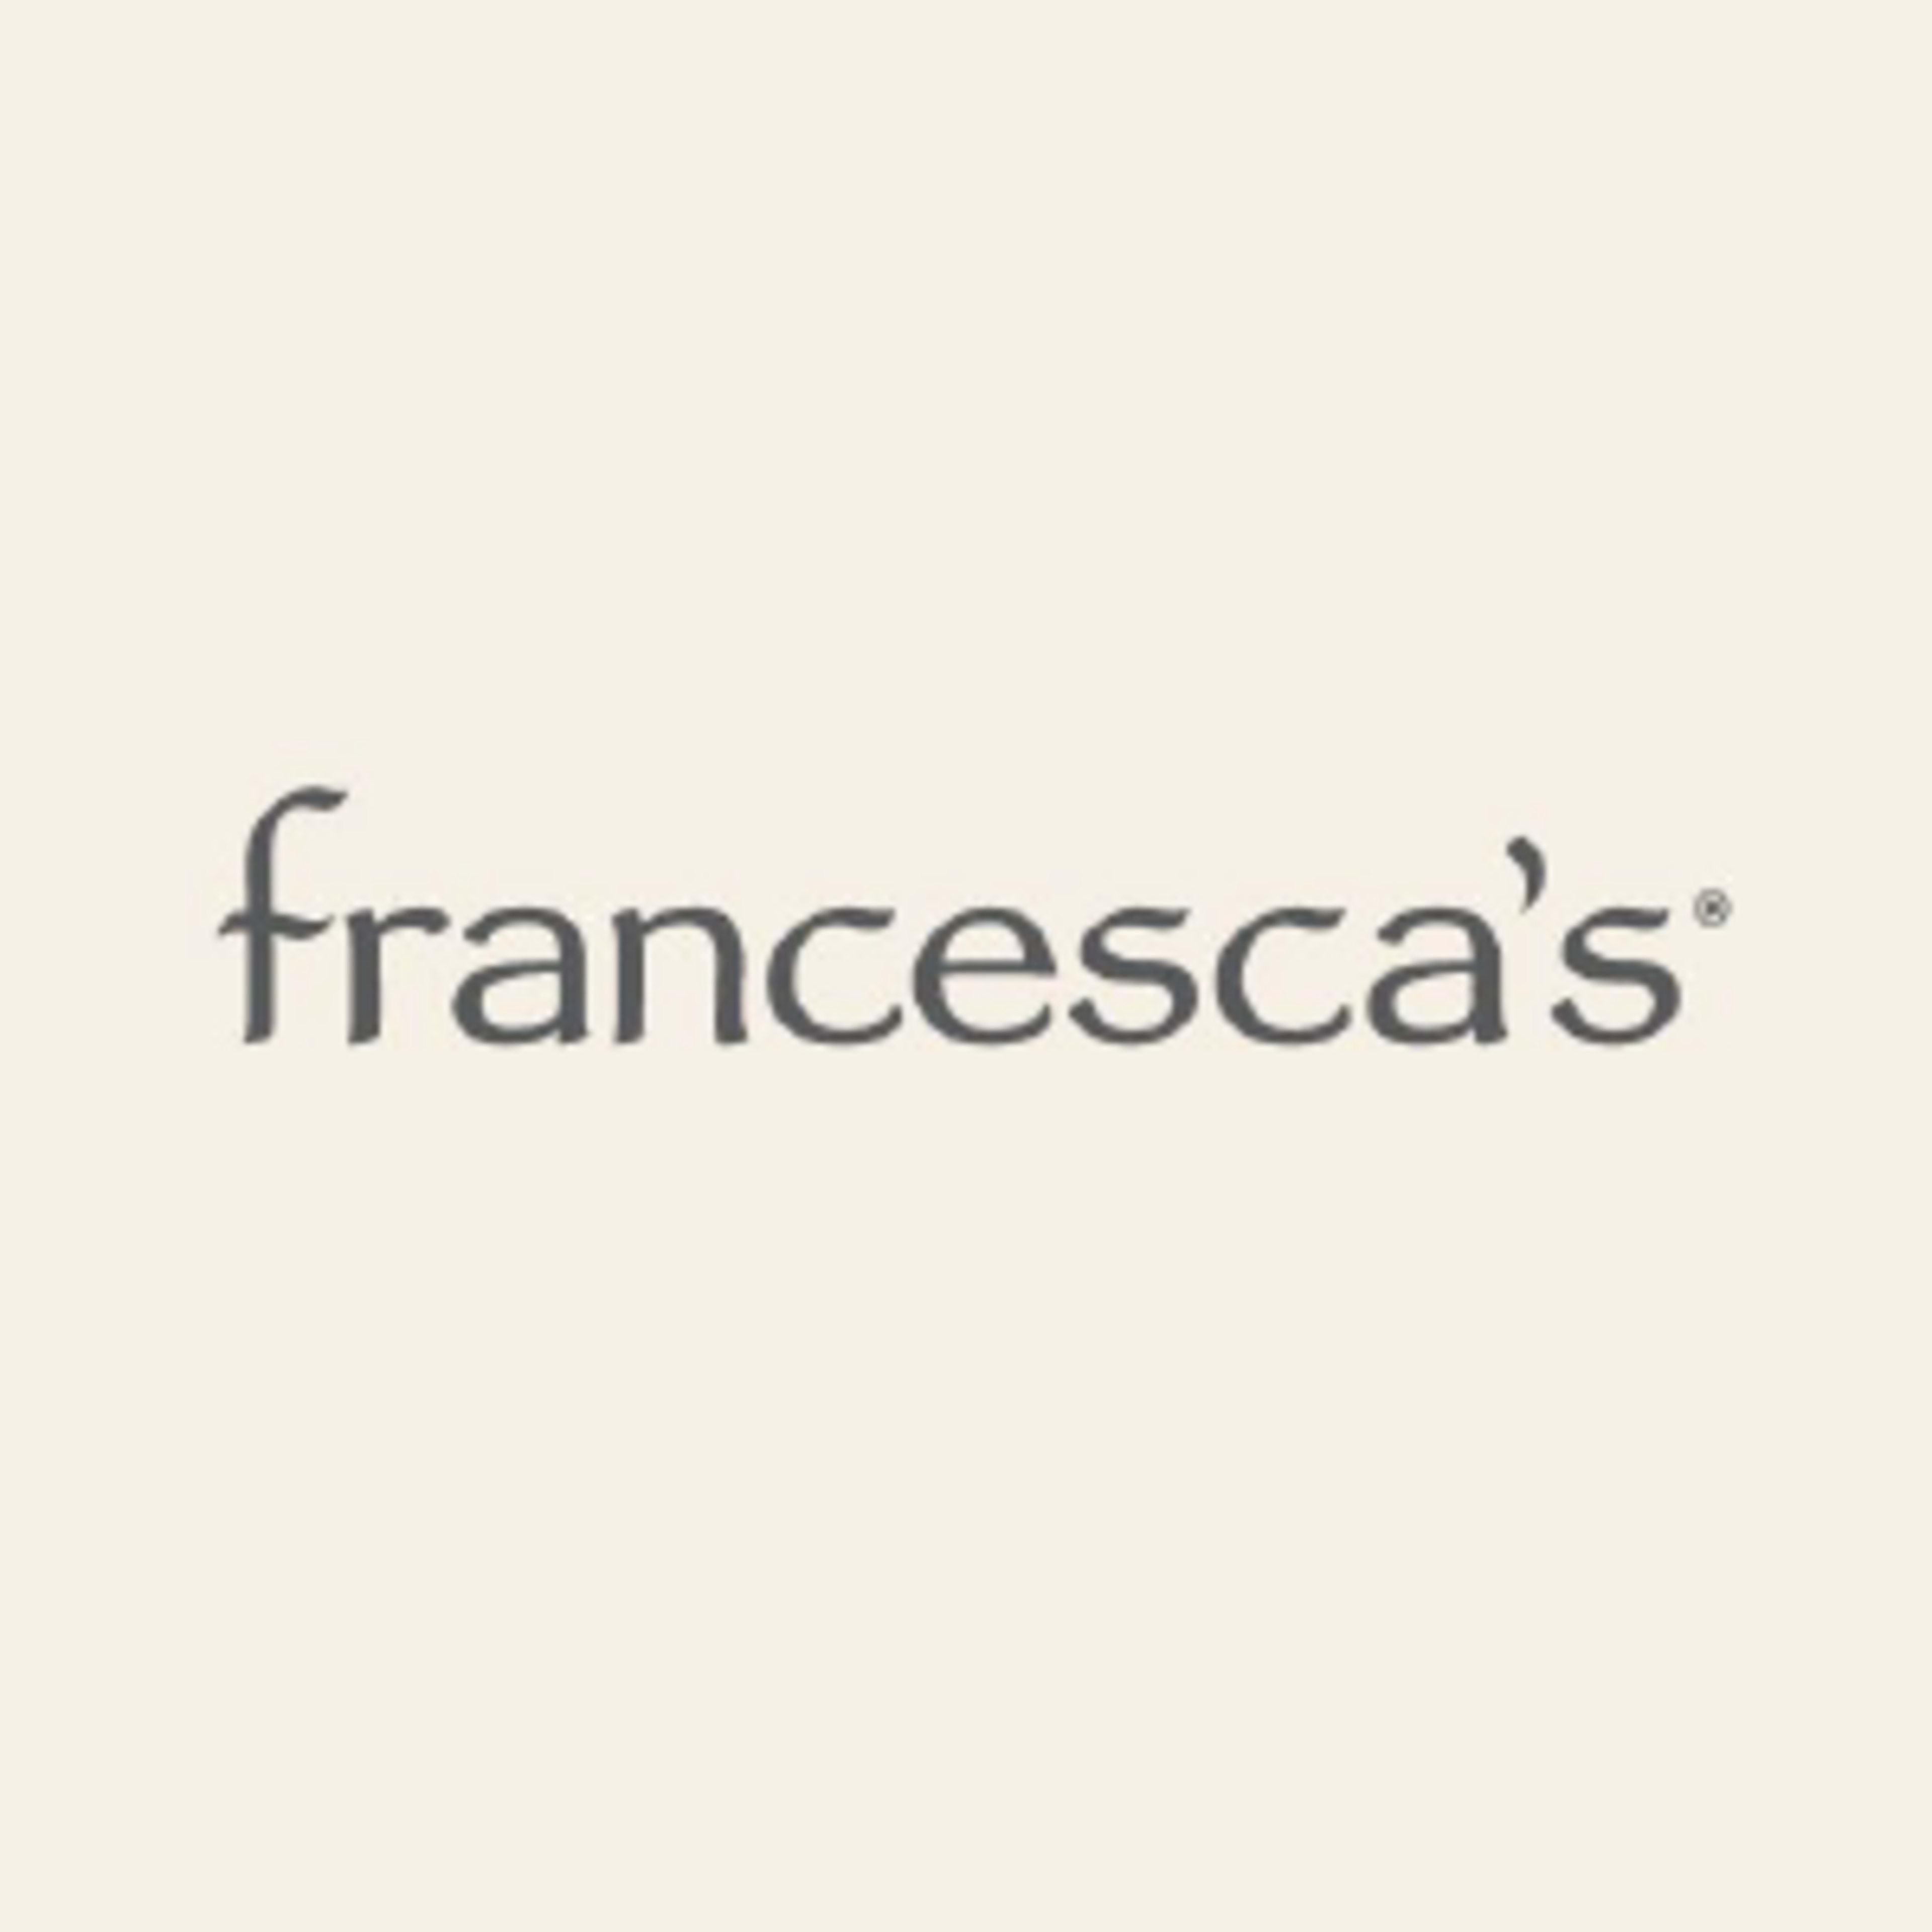 Francesca'sCode